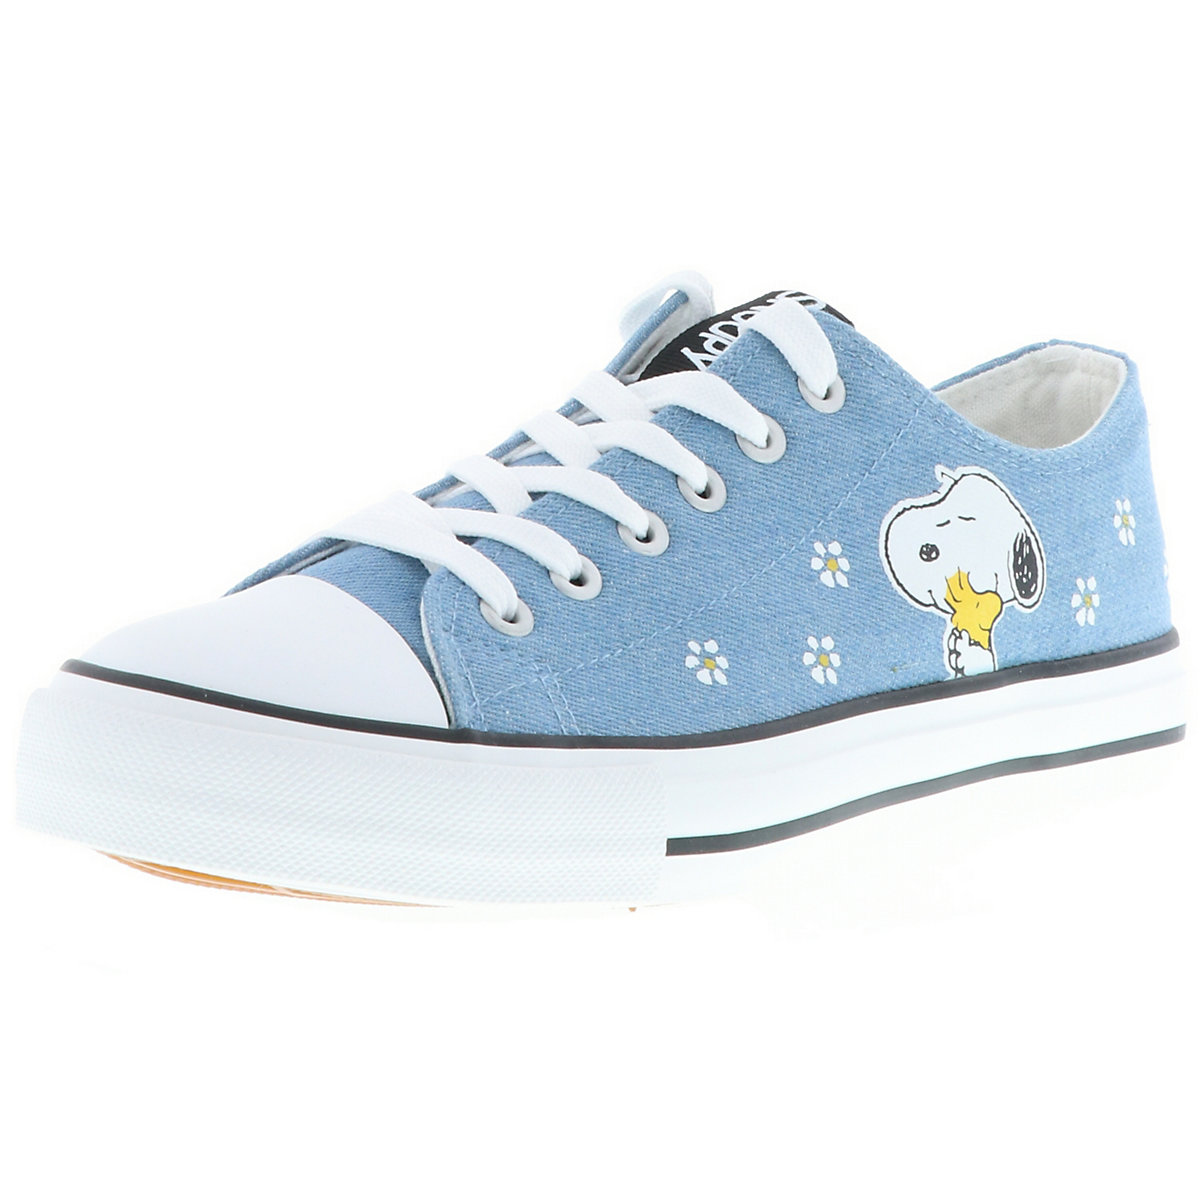 Leomil PEANUTS Snoopy Damen Mädchen Kinder Casual Sneaker Low-Cut Canvas blau blau